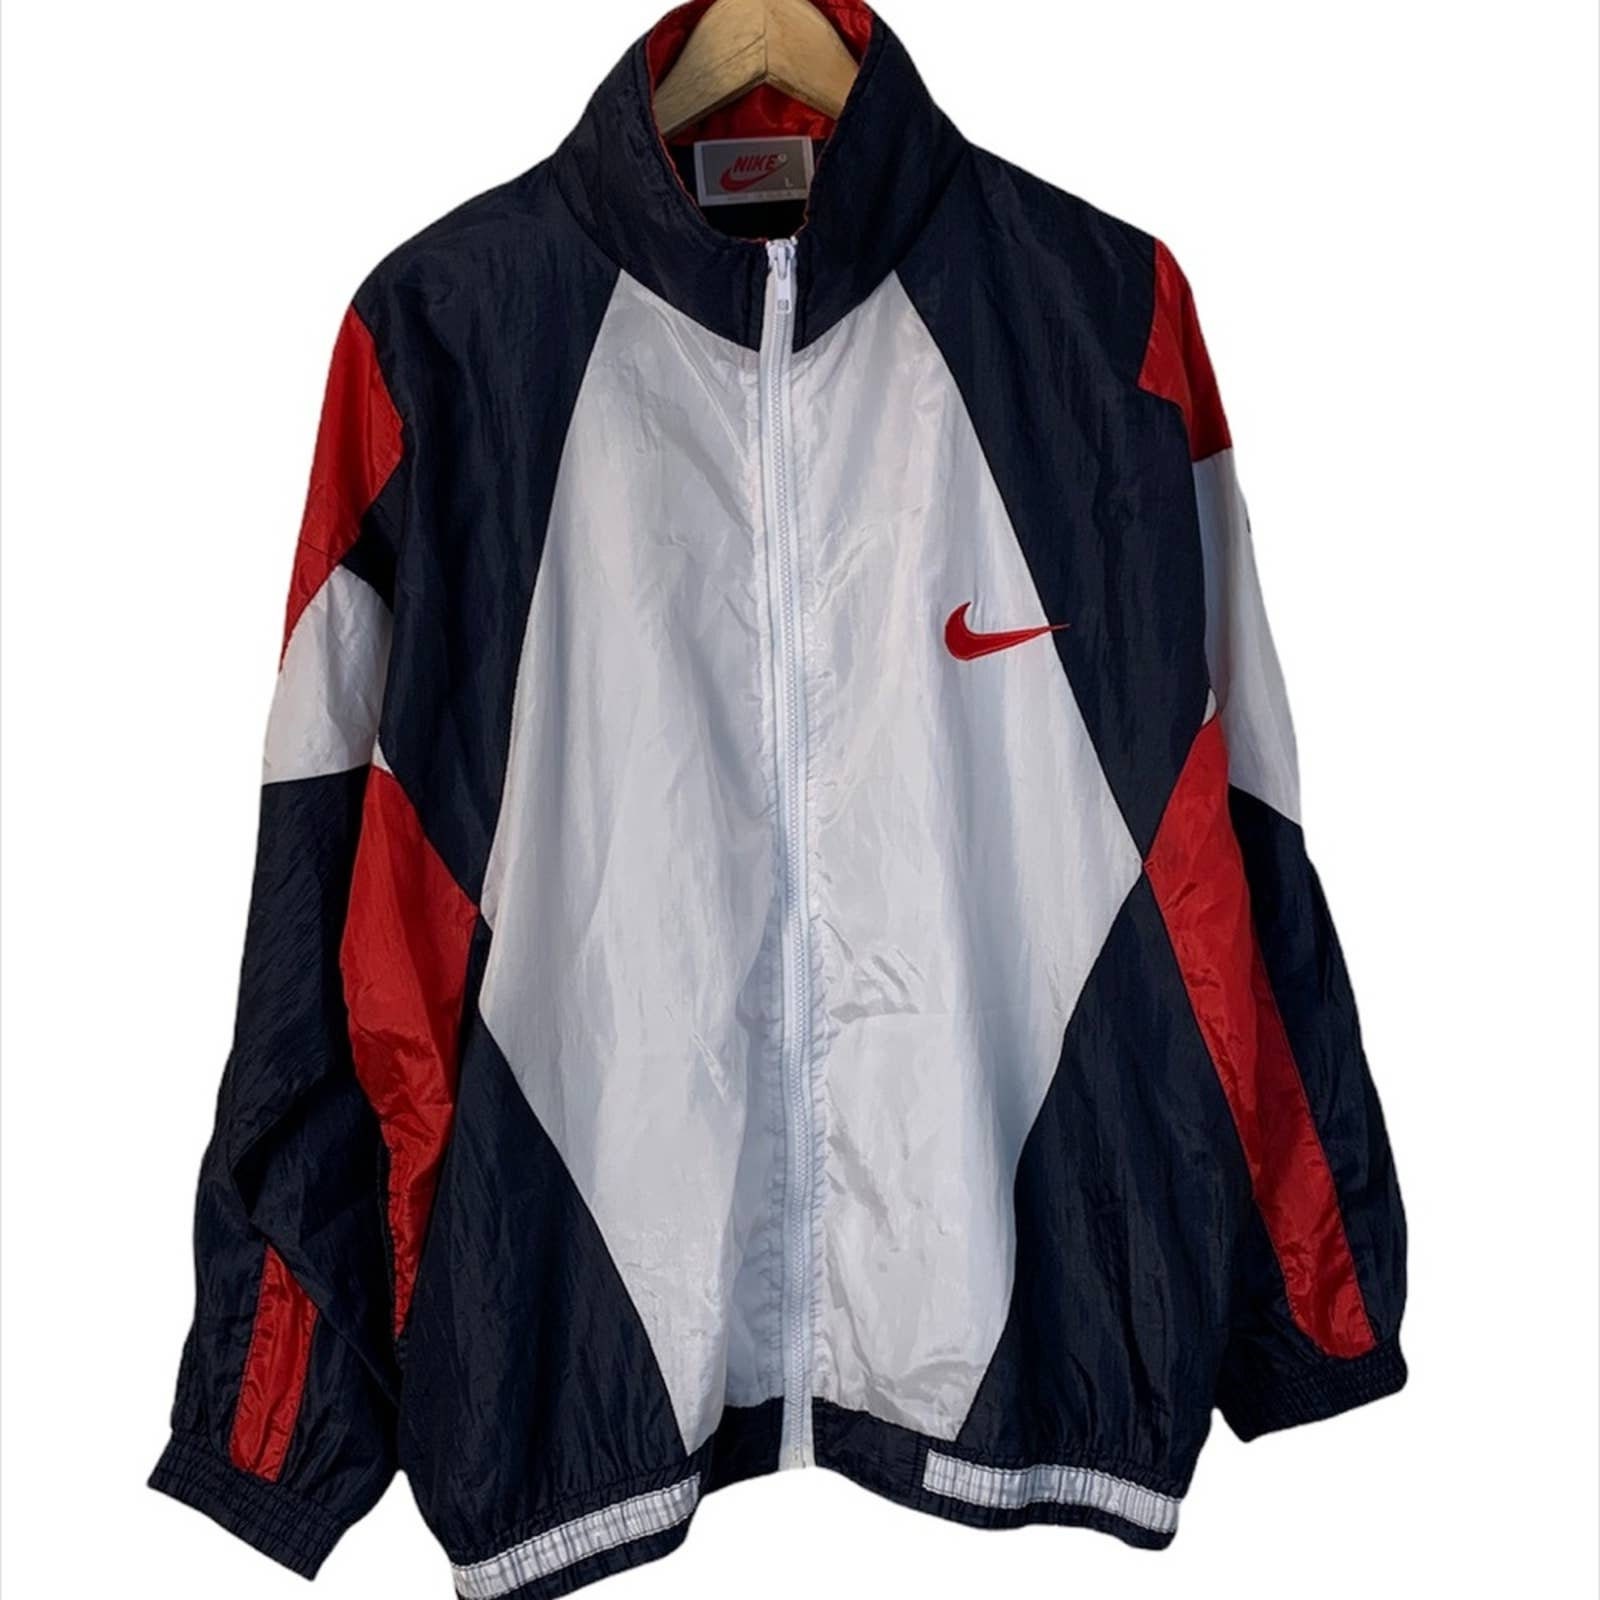 Vintage Nike Windbreaker Jacket Etsy